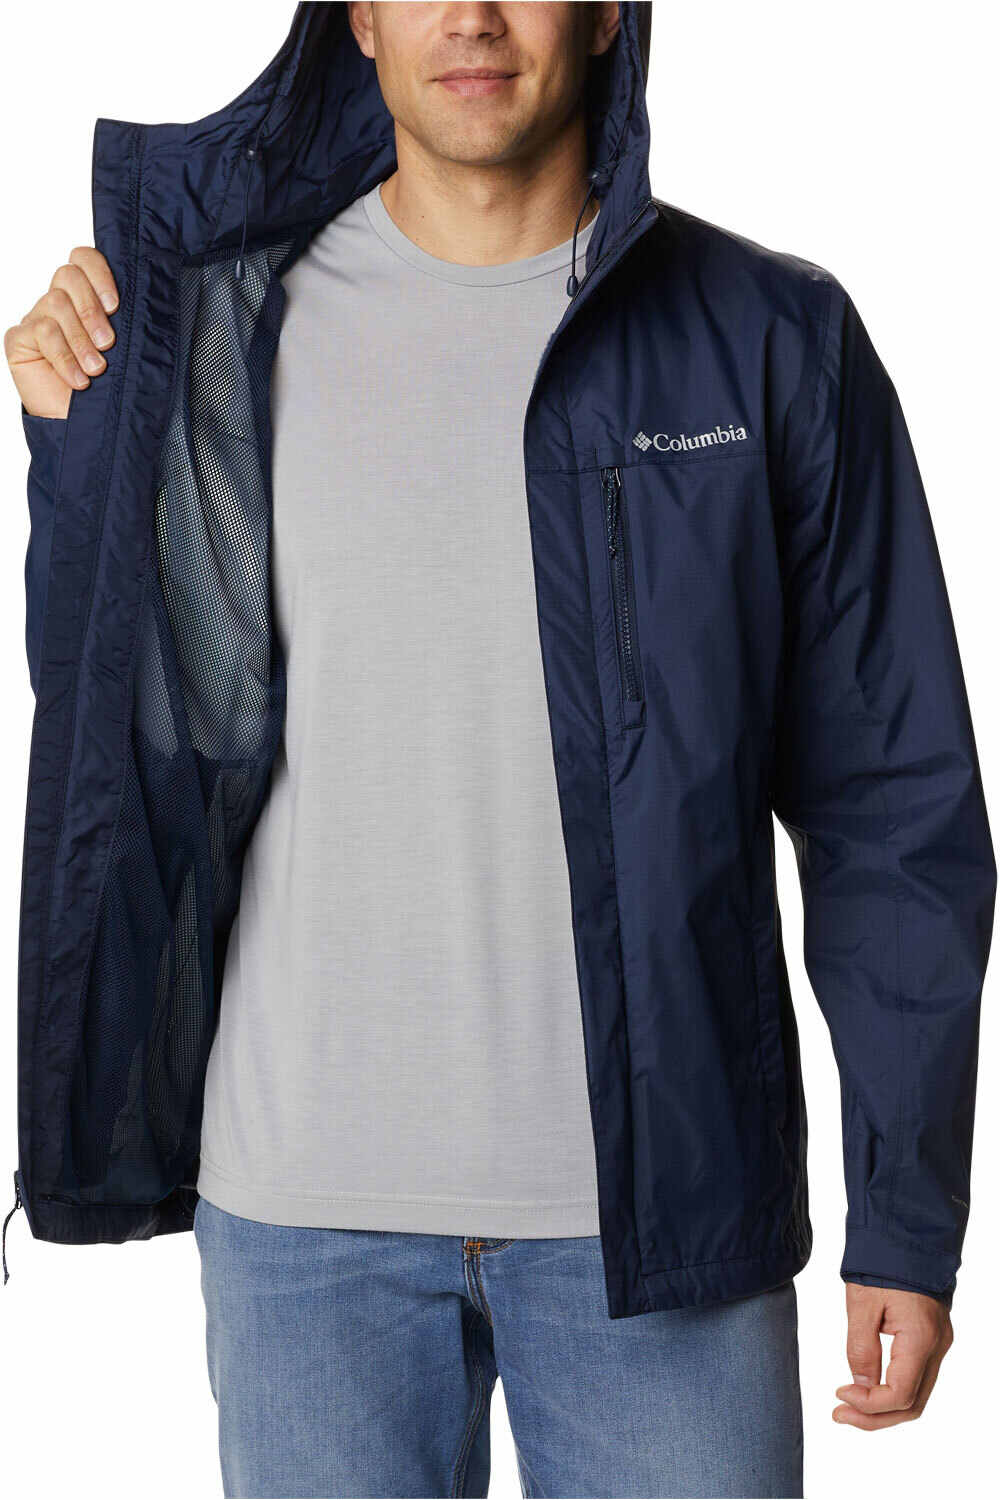 Columbia chaqueta impermeable hombre Pouring Adventure II Jacket vista trasera